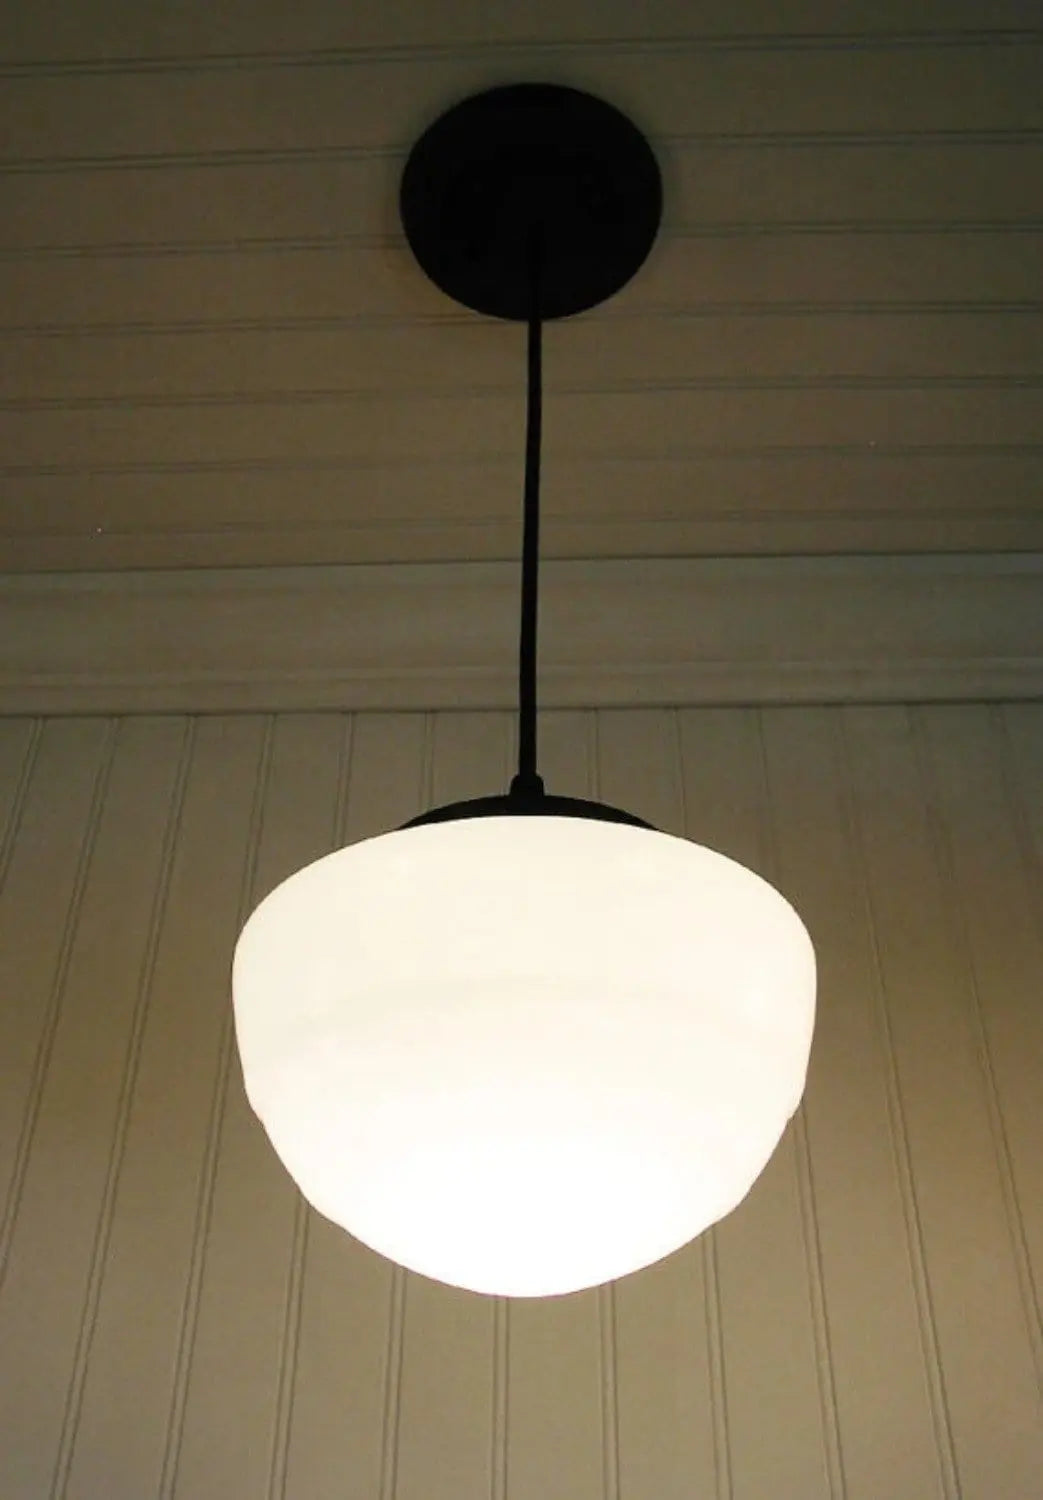 Pendant LIGHT Fixture of Replica Mushroom Globe - The Lamp Goods